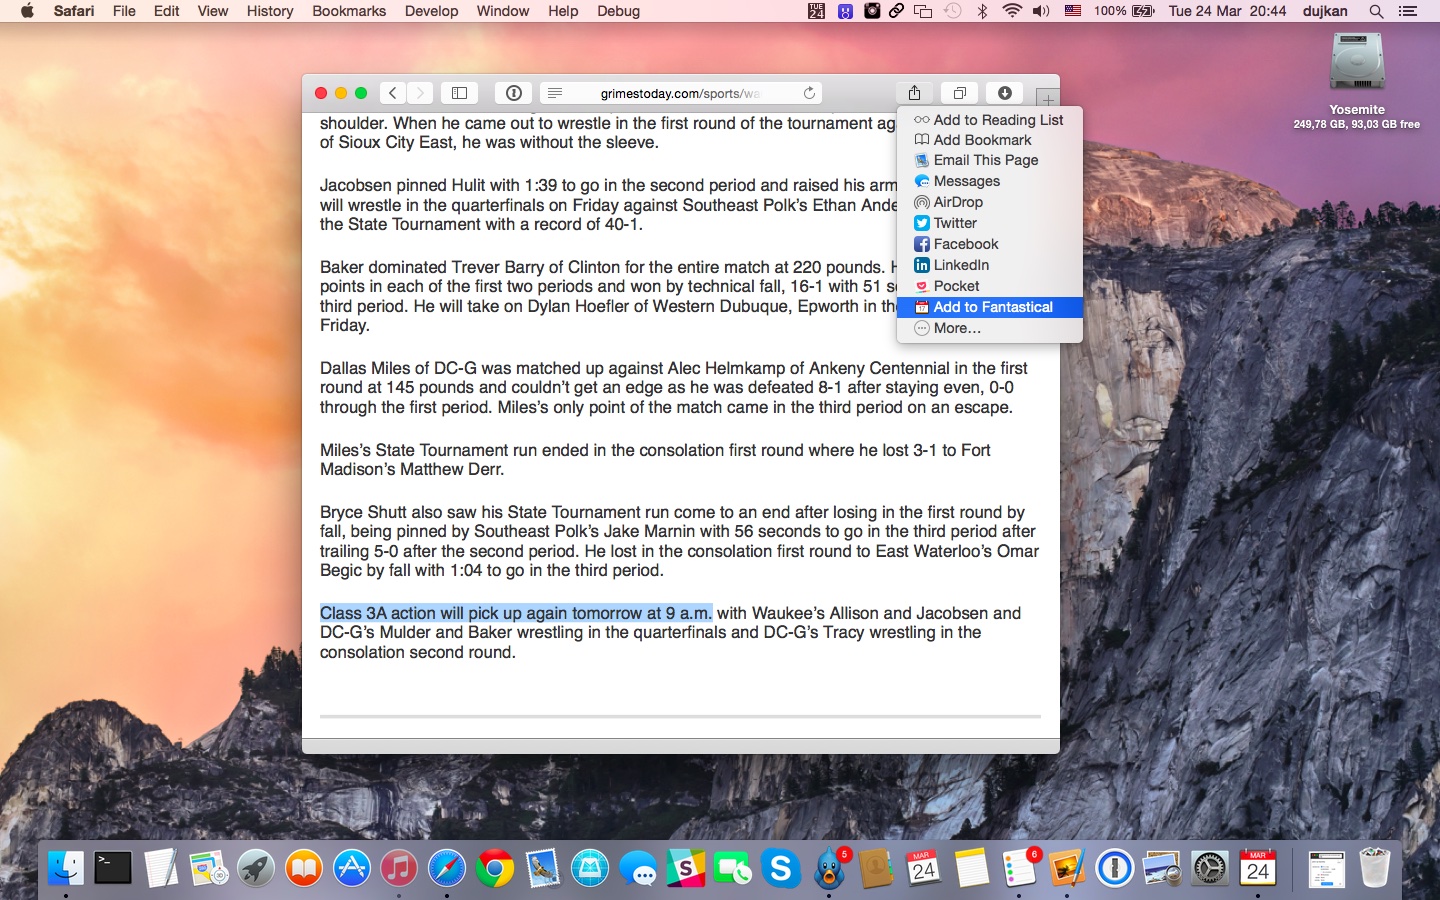 Fantastical 2 for OS X Mac screenshot 011